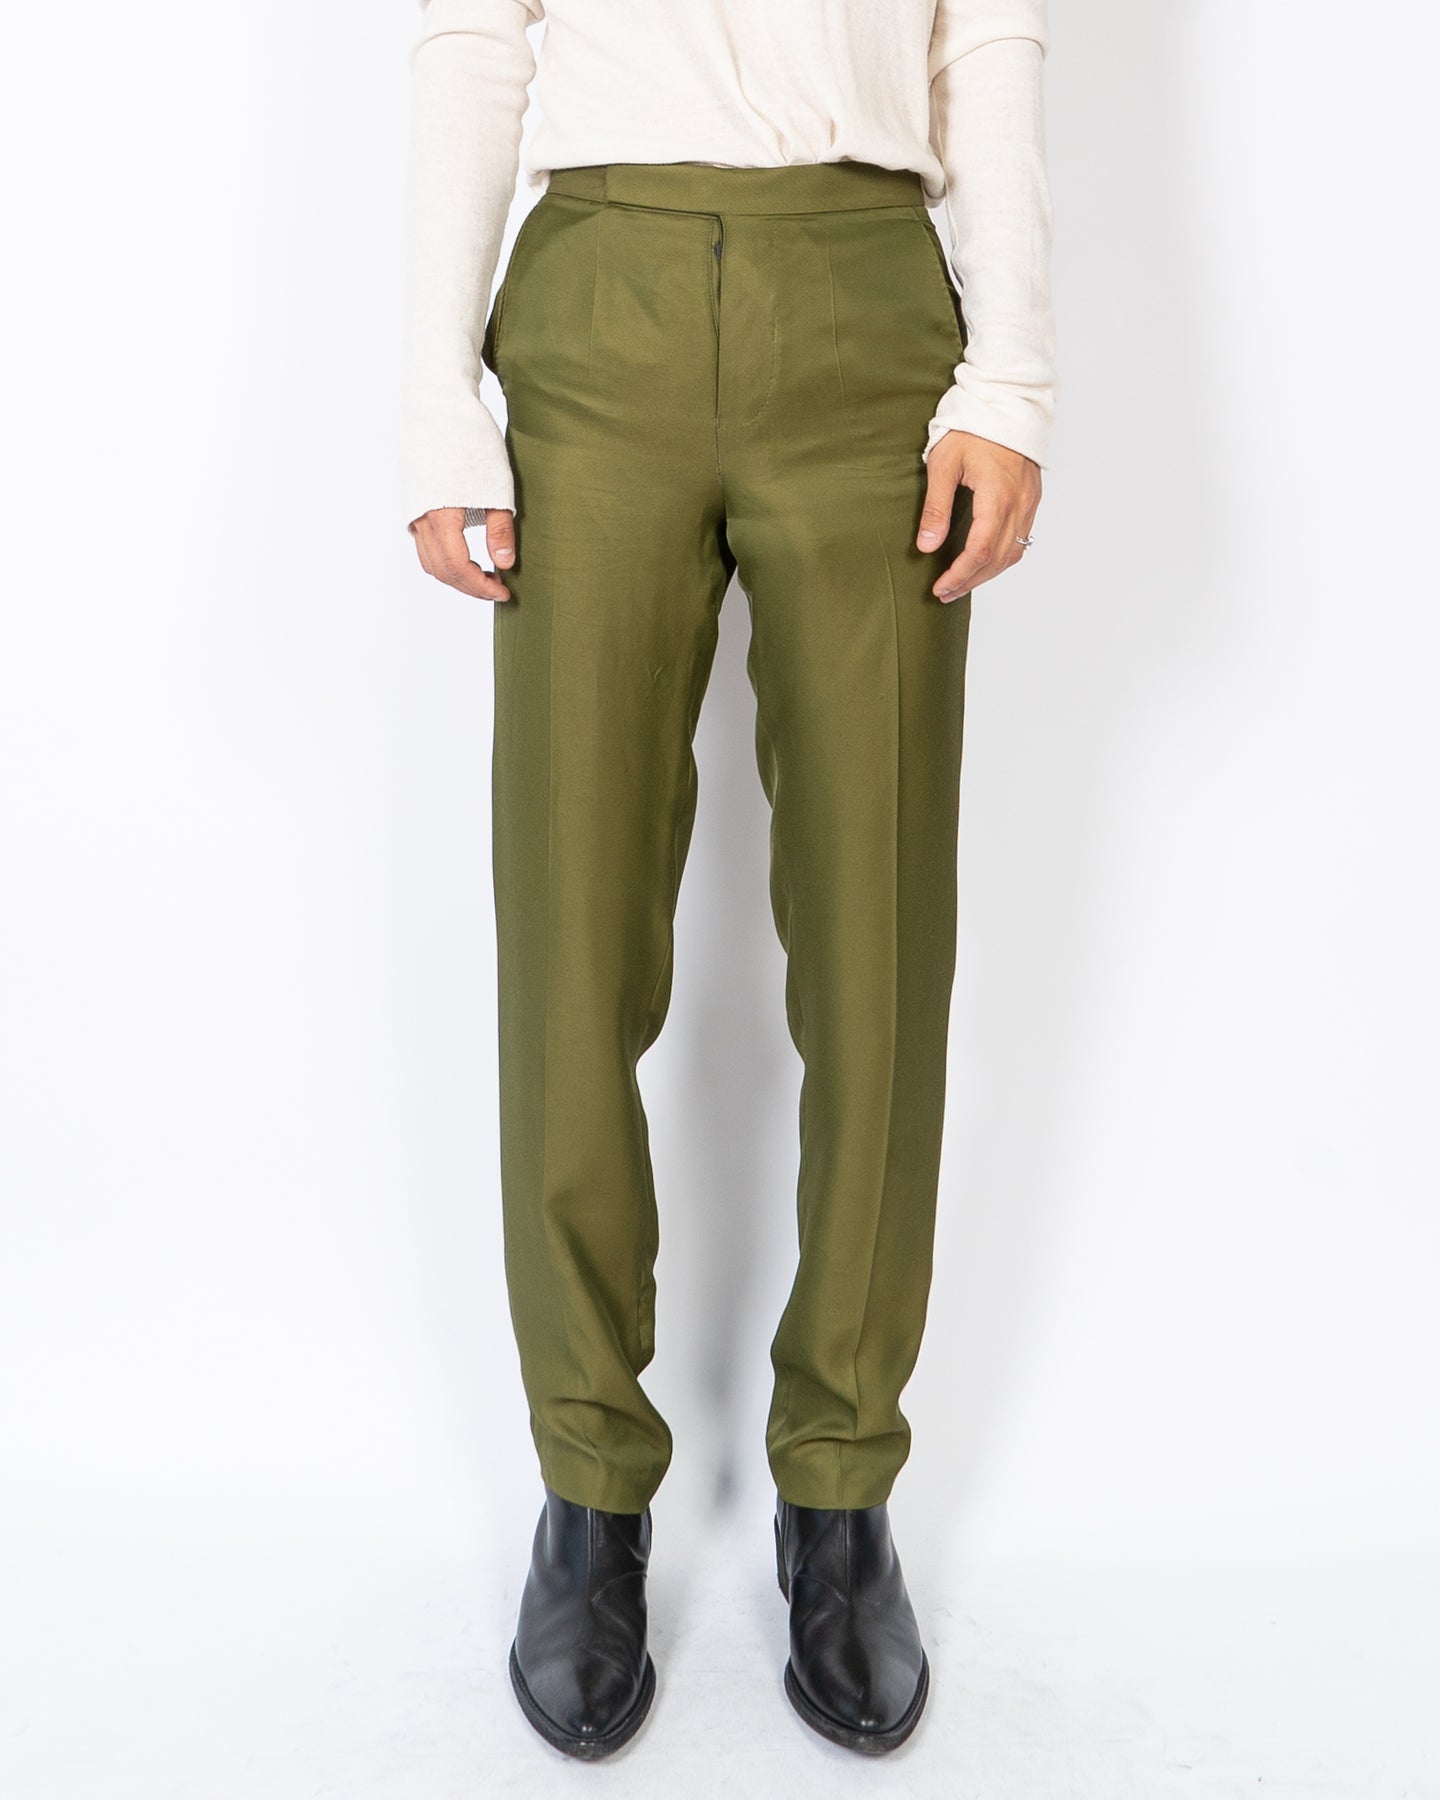 SS20 Warrant Khaki Trousers Sample